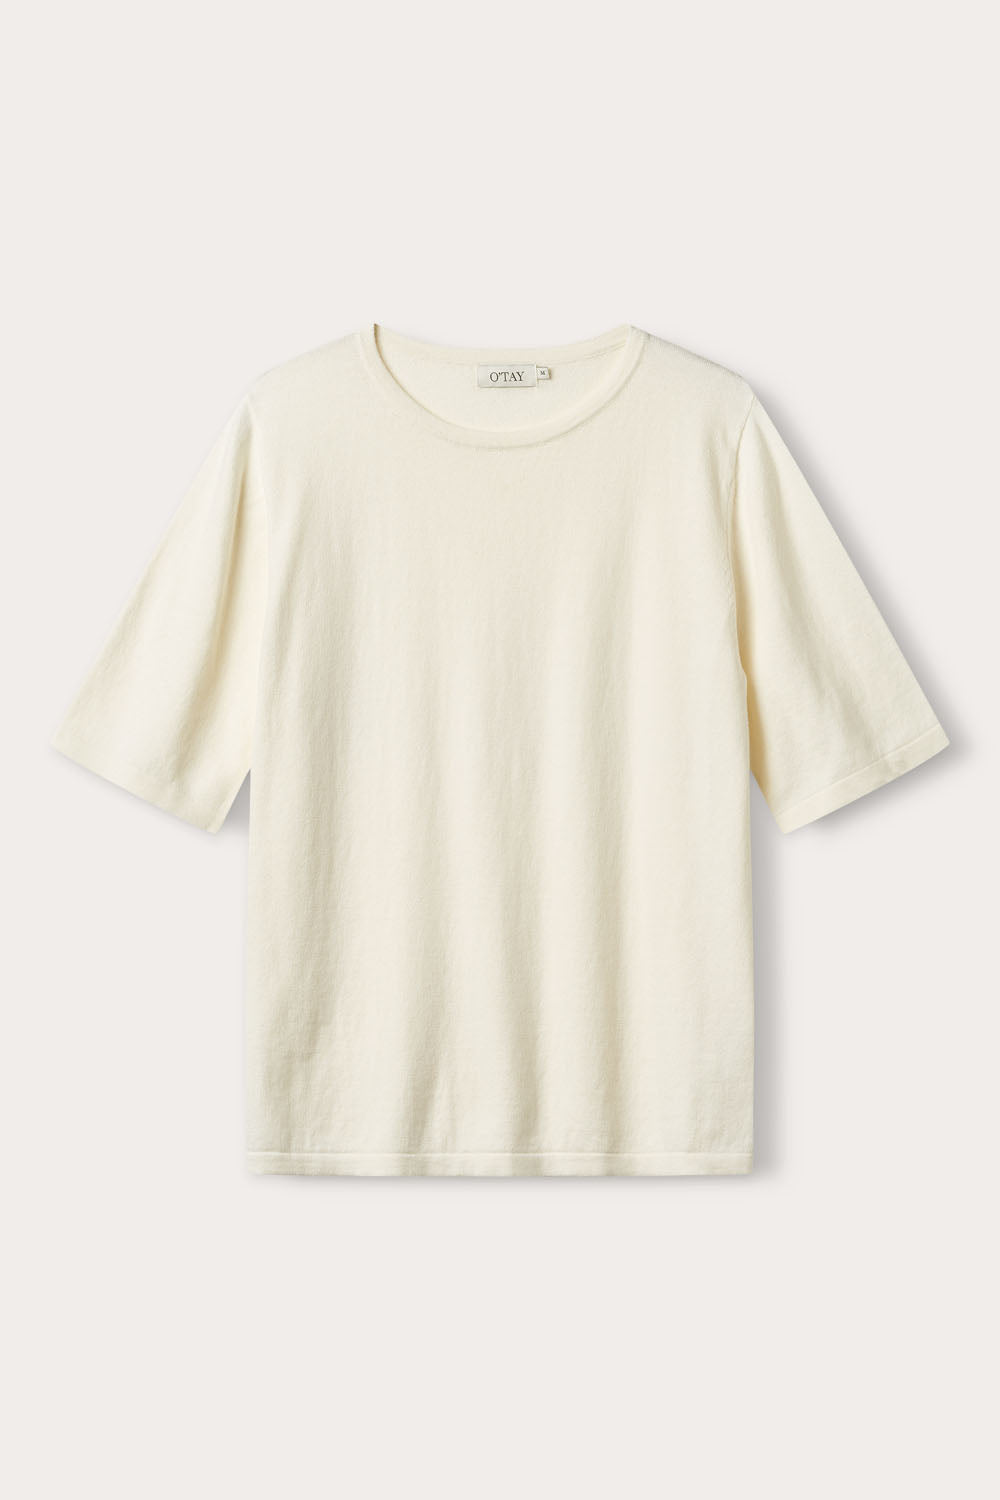 O'TAY Gina T-Shirt T-Shirts Off White